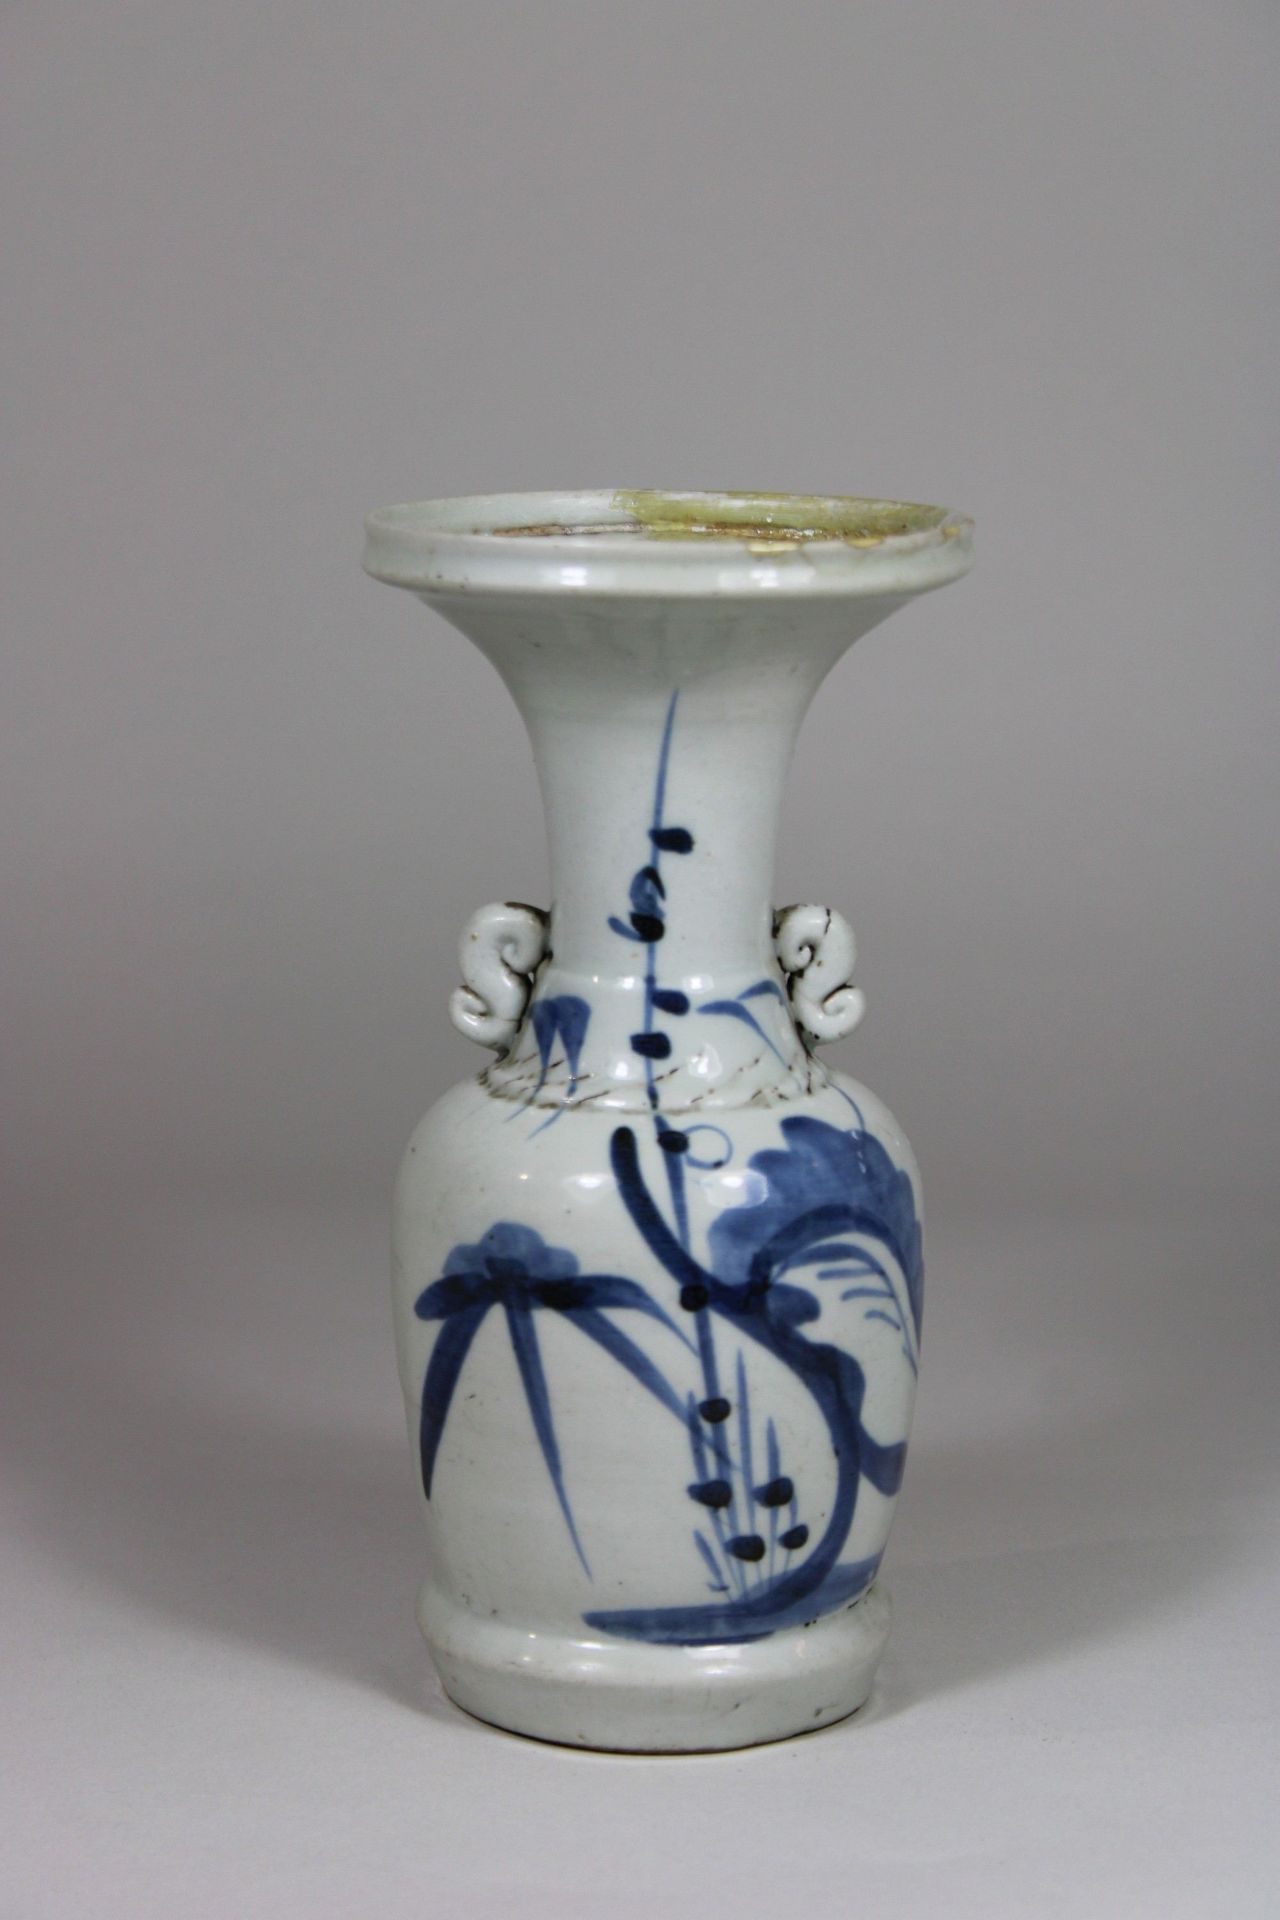 Vase, Thailand / Japan, floral bemalt im Blau, H ca. 19,5 cm, Guter, altersbedingter Zustand. - Image 4 of 4